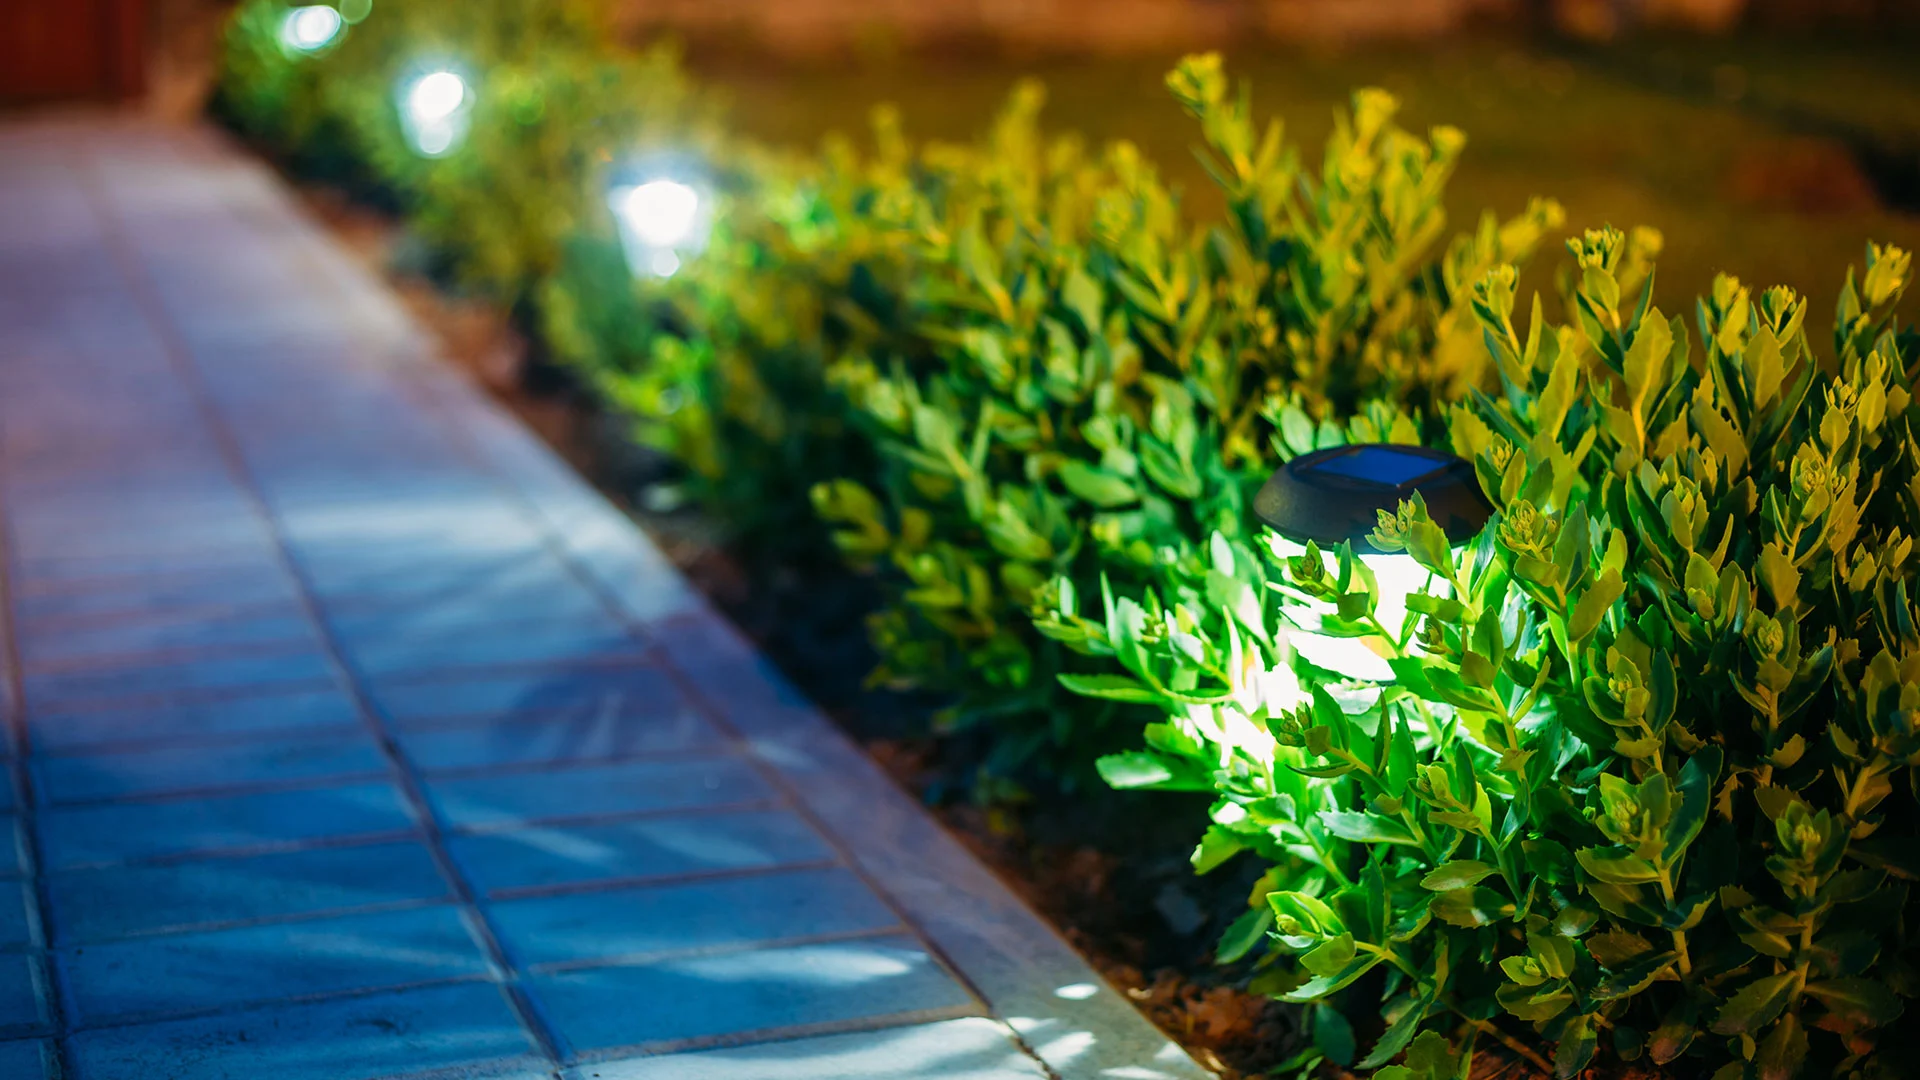 Use outdoor lighting to illuminate walkways and spotlight landscape plants.